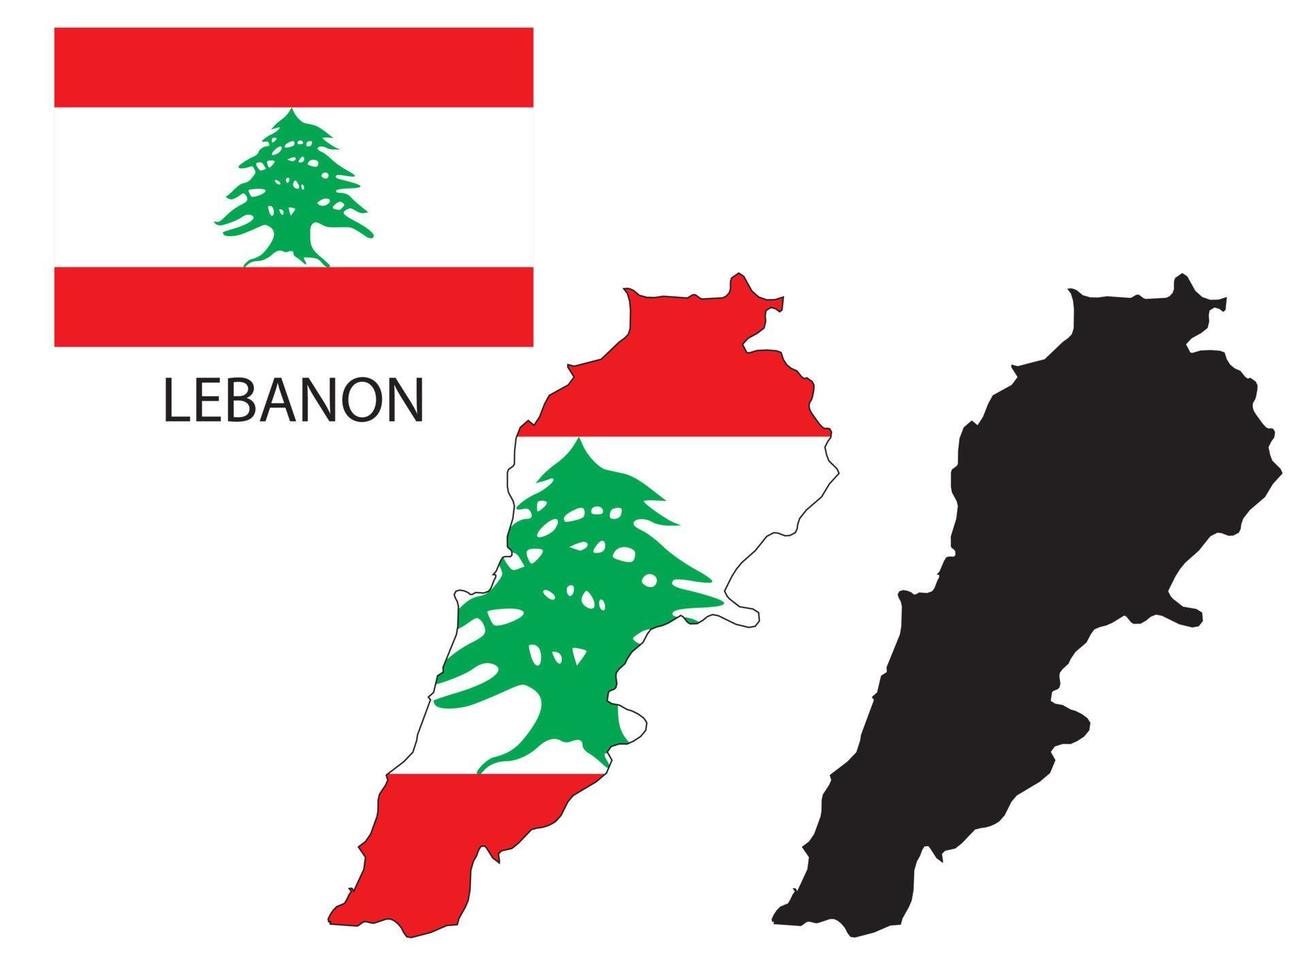 lebanon flag and map illustration vector